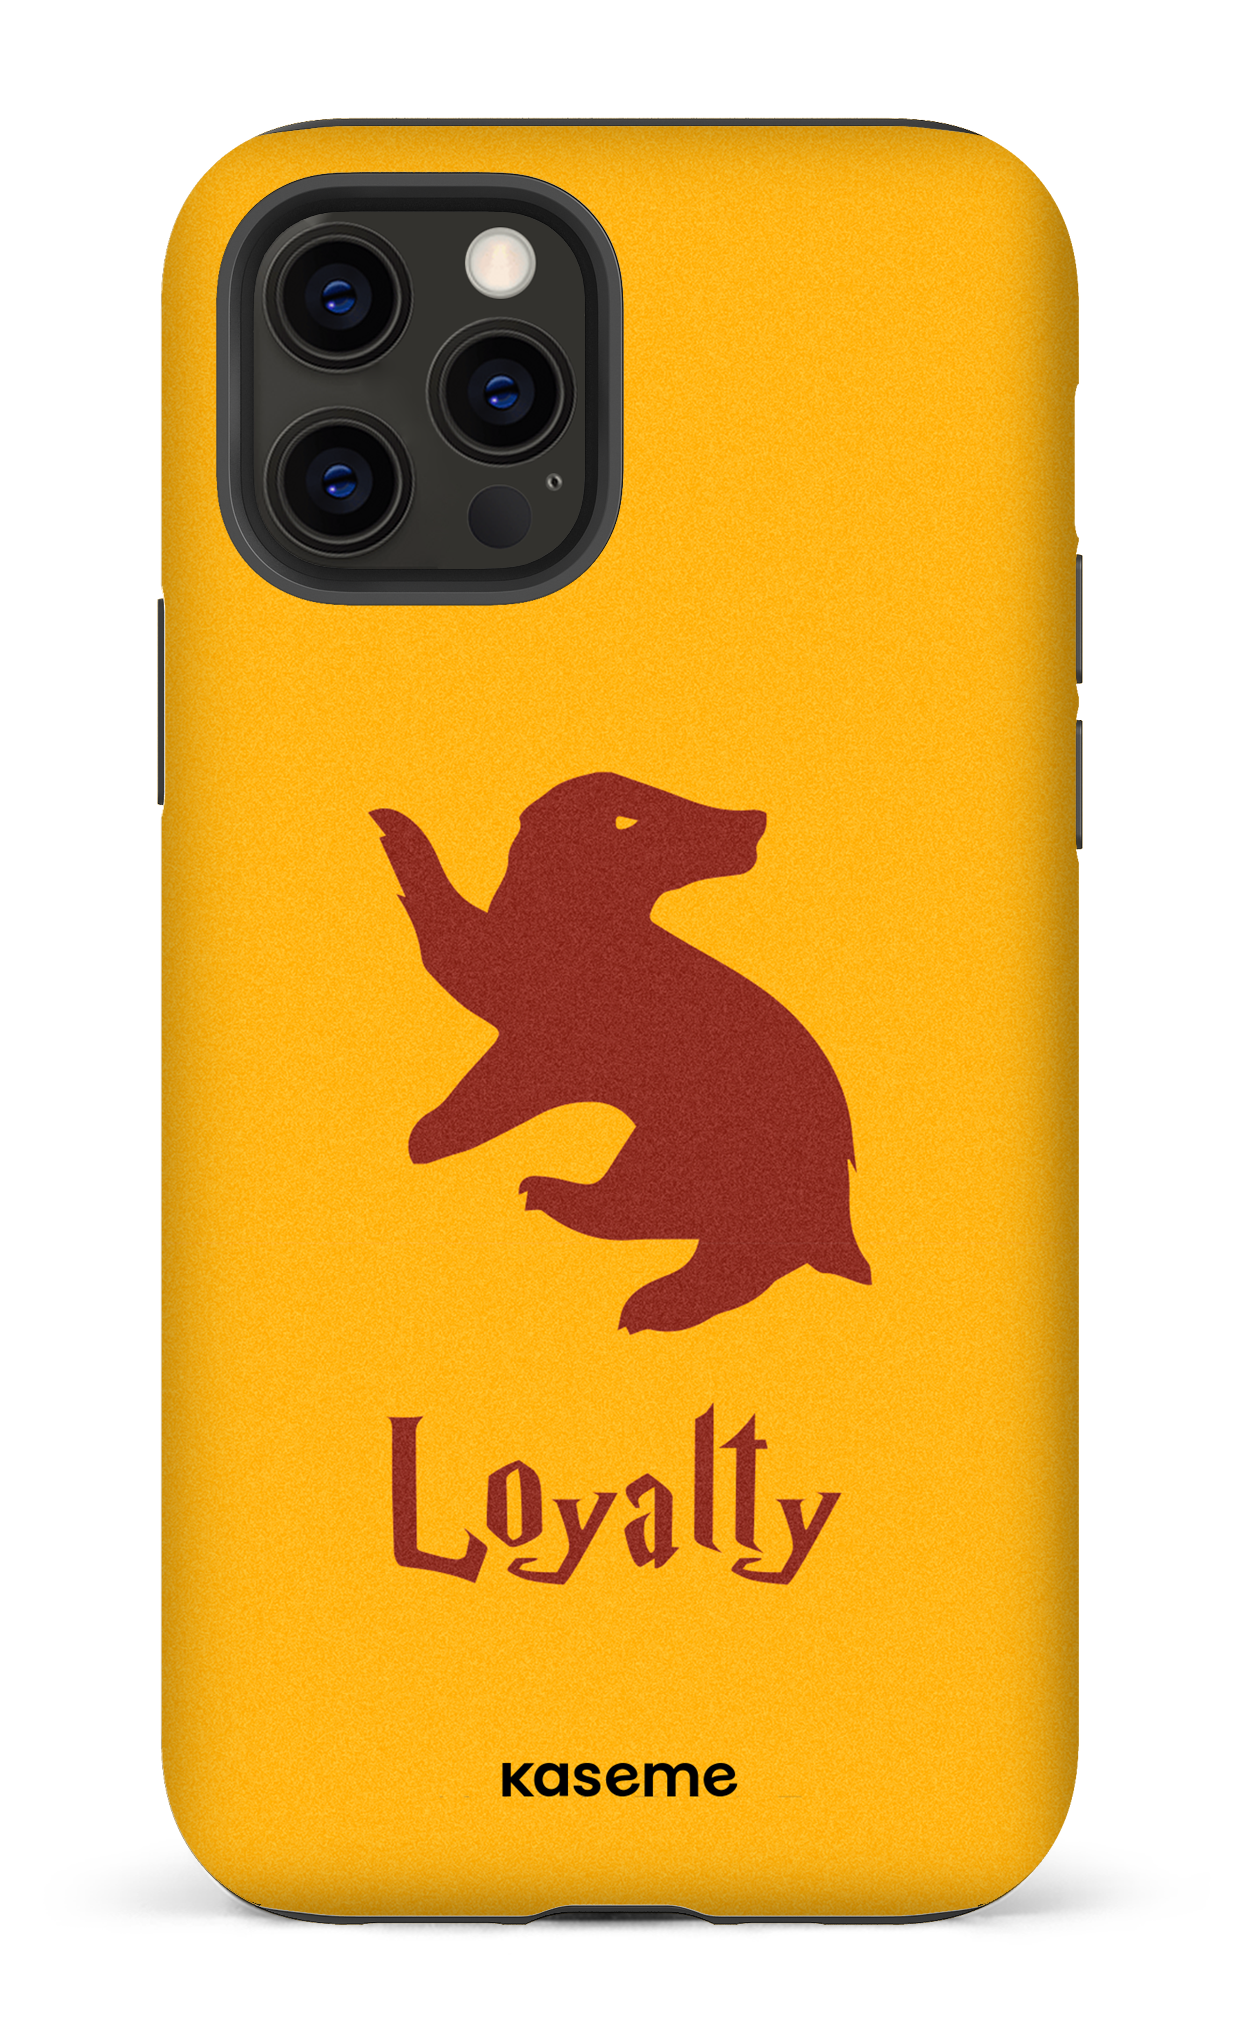 Loyalty - iPhone 12 Pro